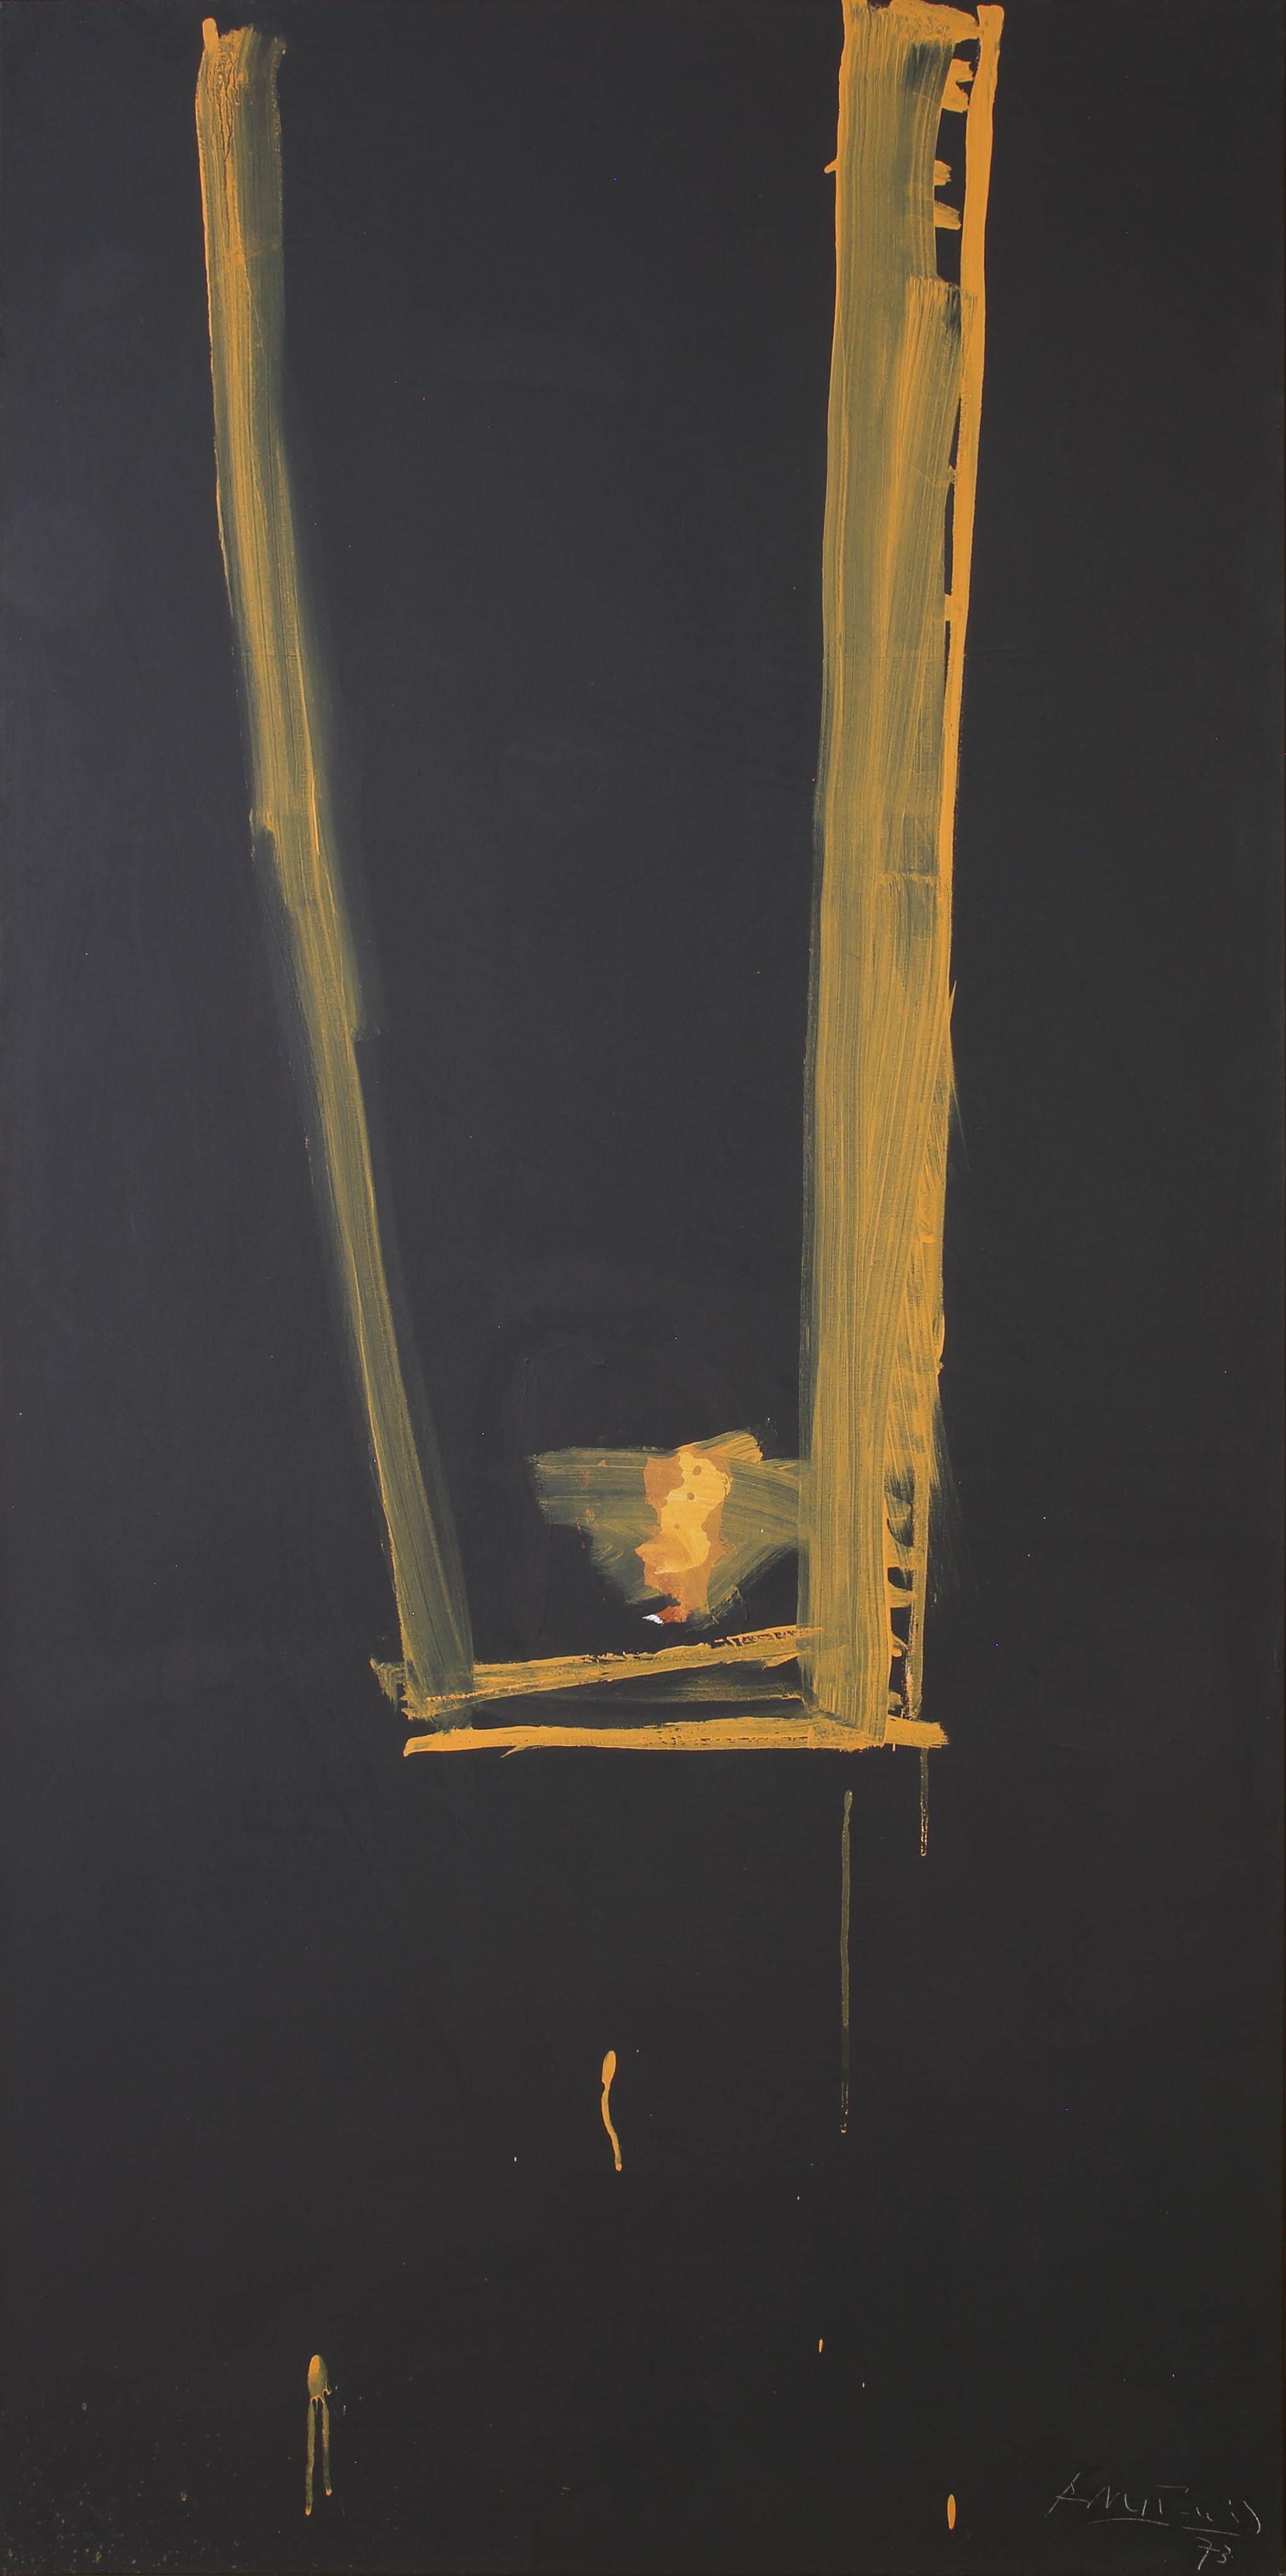 Abstract Painting Robert Motherwell - Noir Ouvert